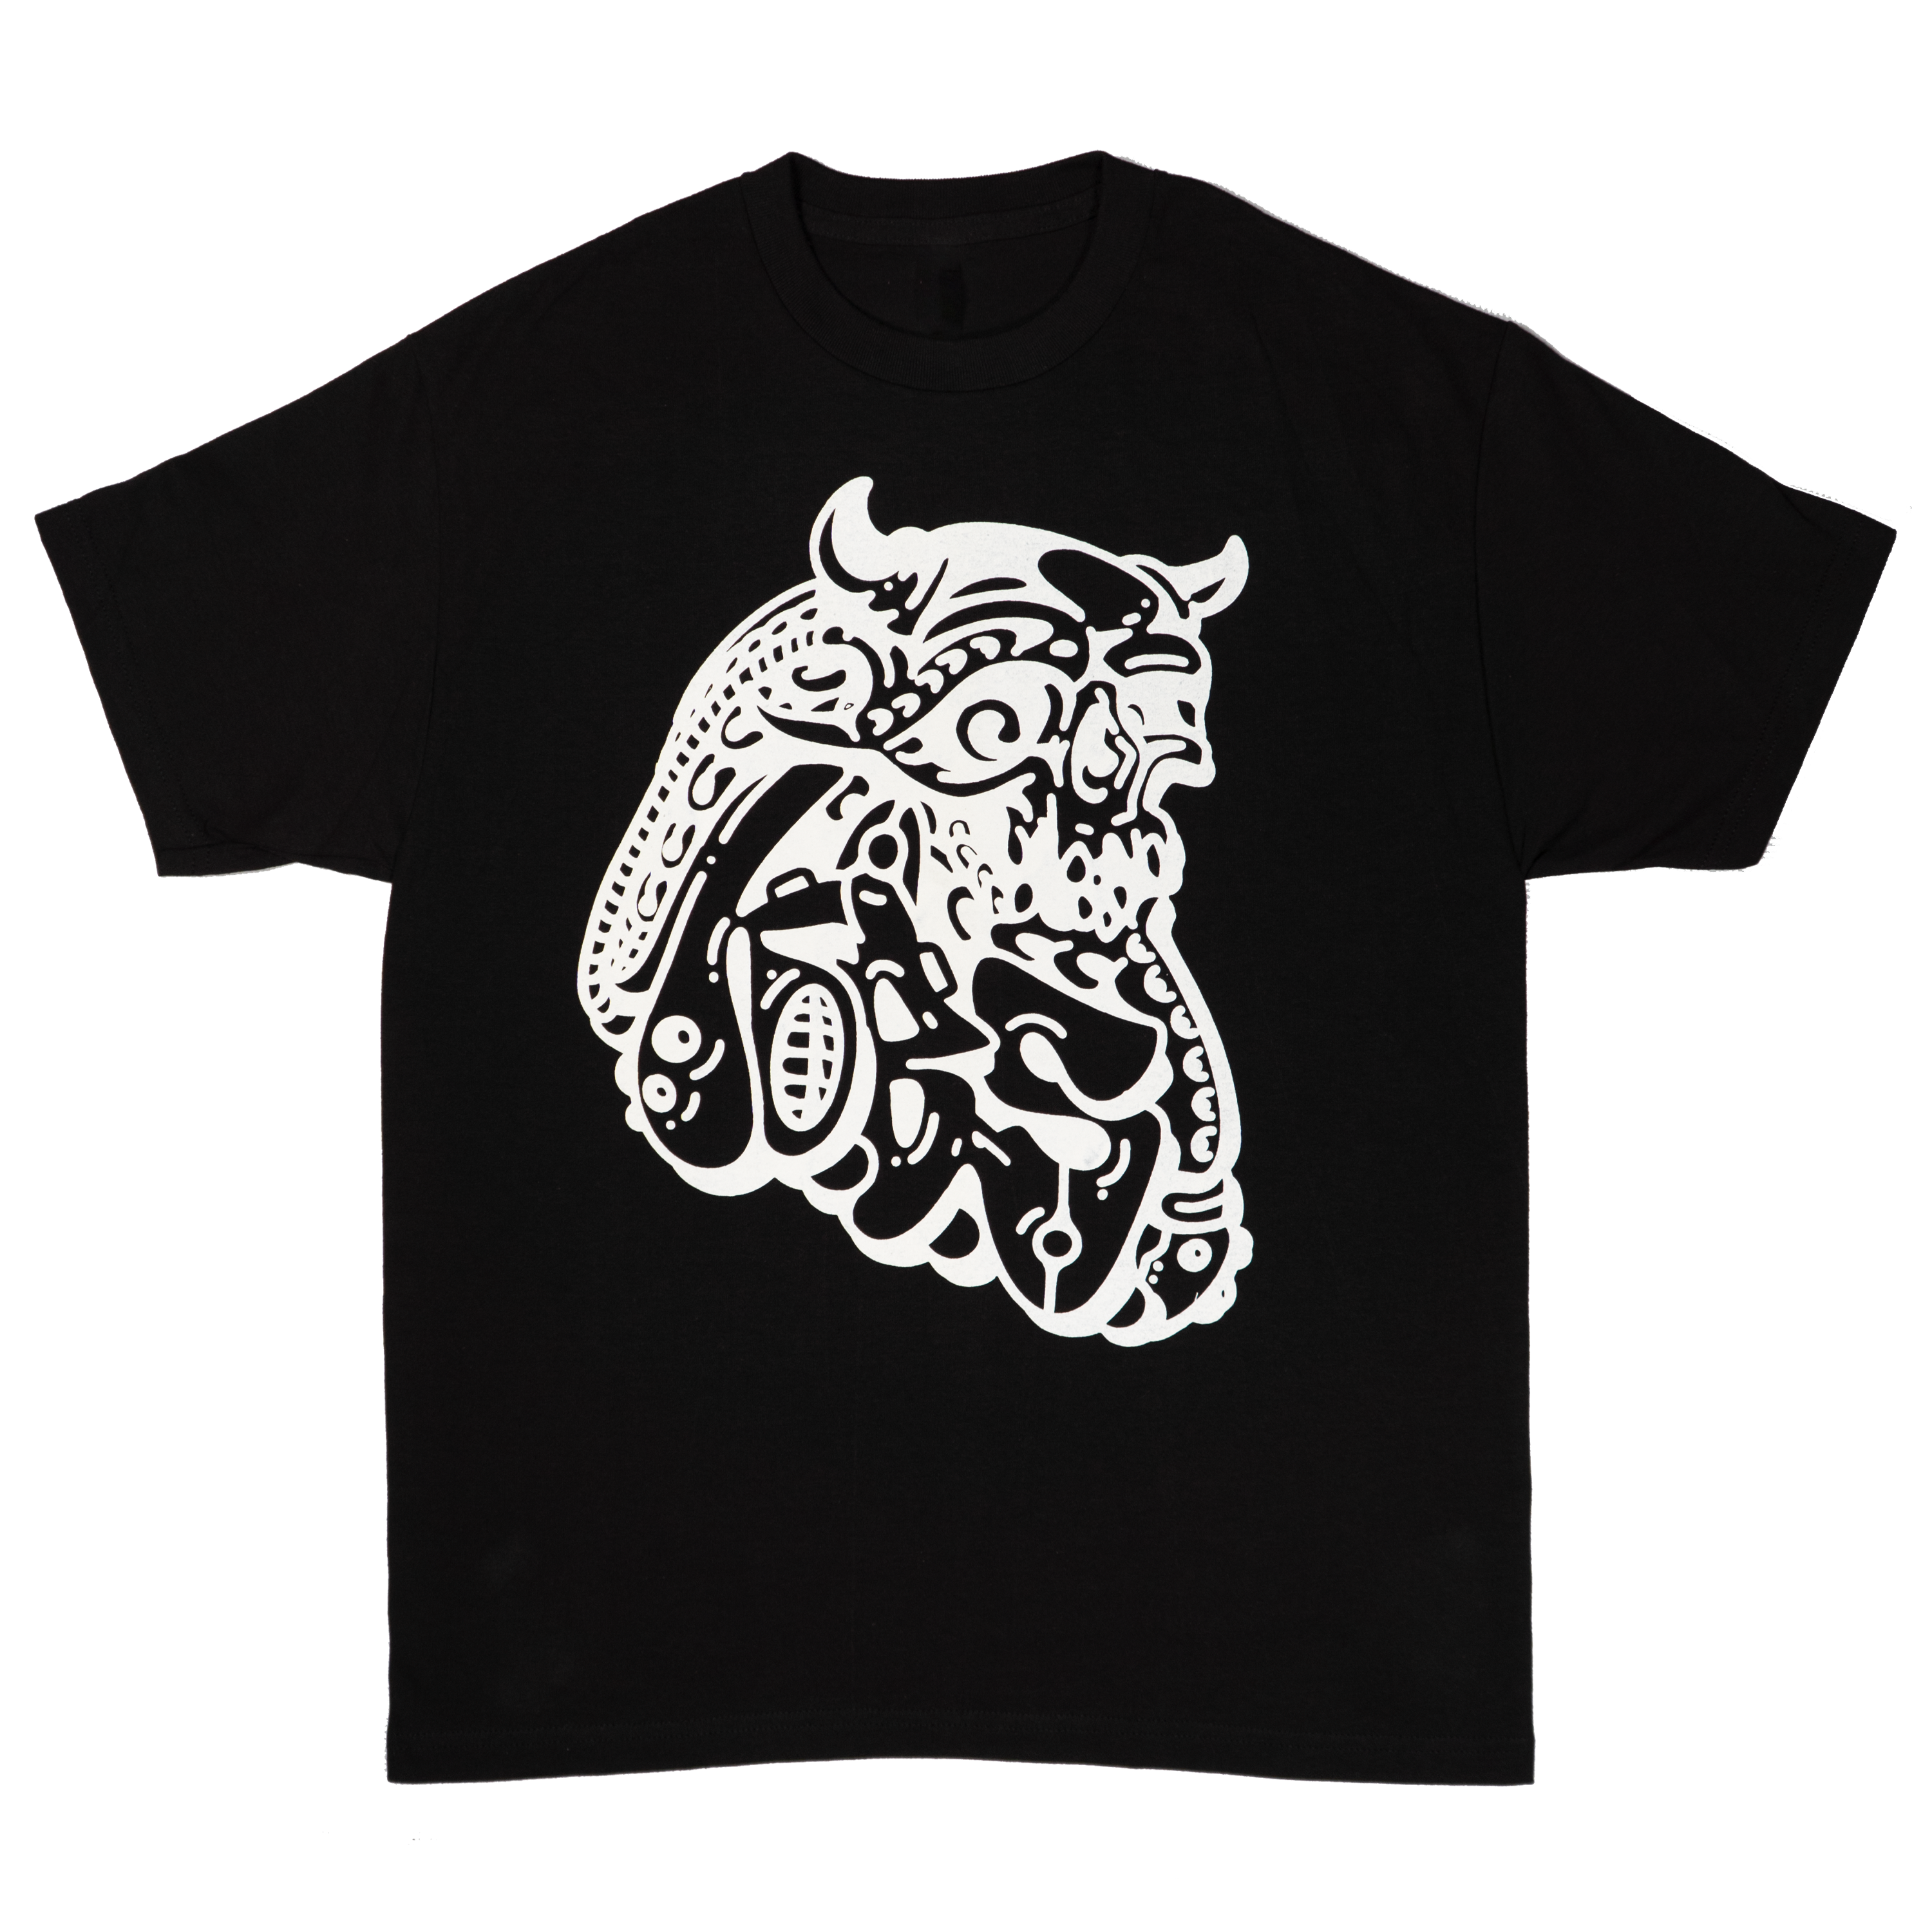 SALE - The Kindness Monster SS T-Shirt Black